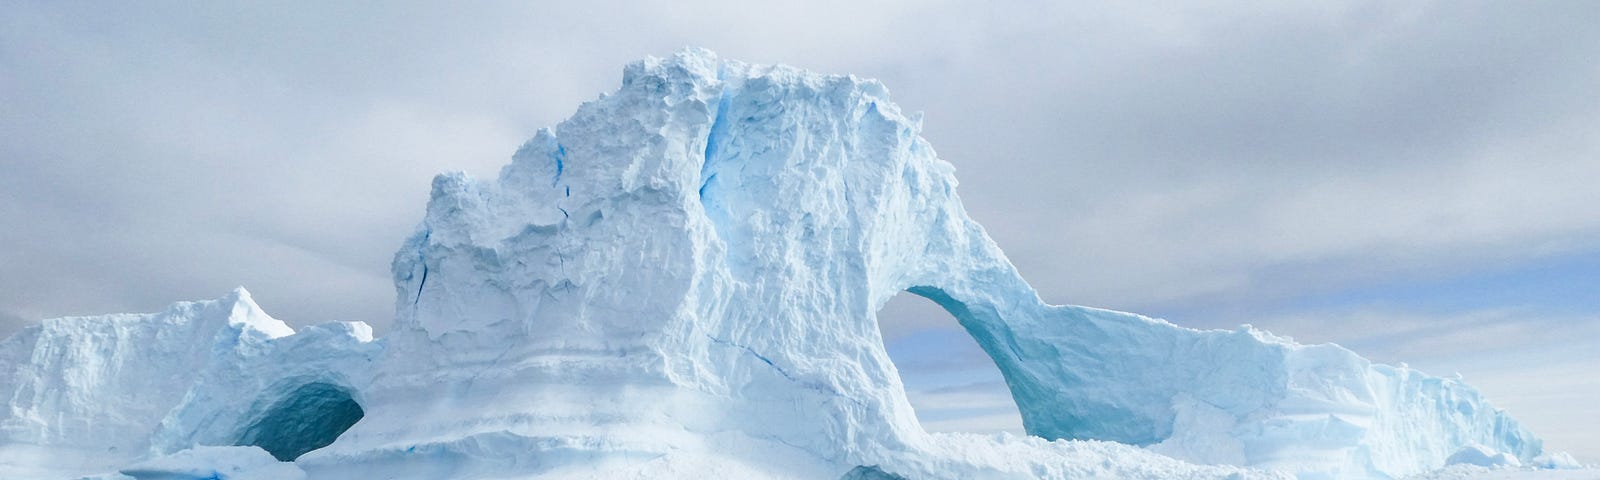 Jojos Bizarre Adventure Theories Iceberg